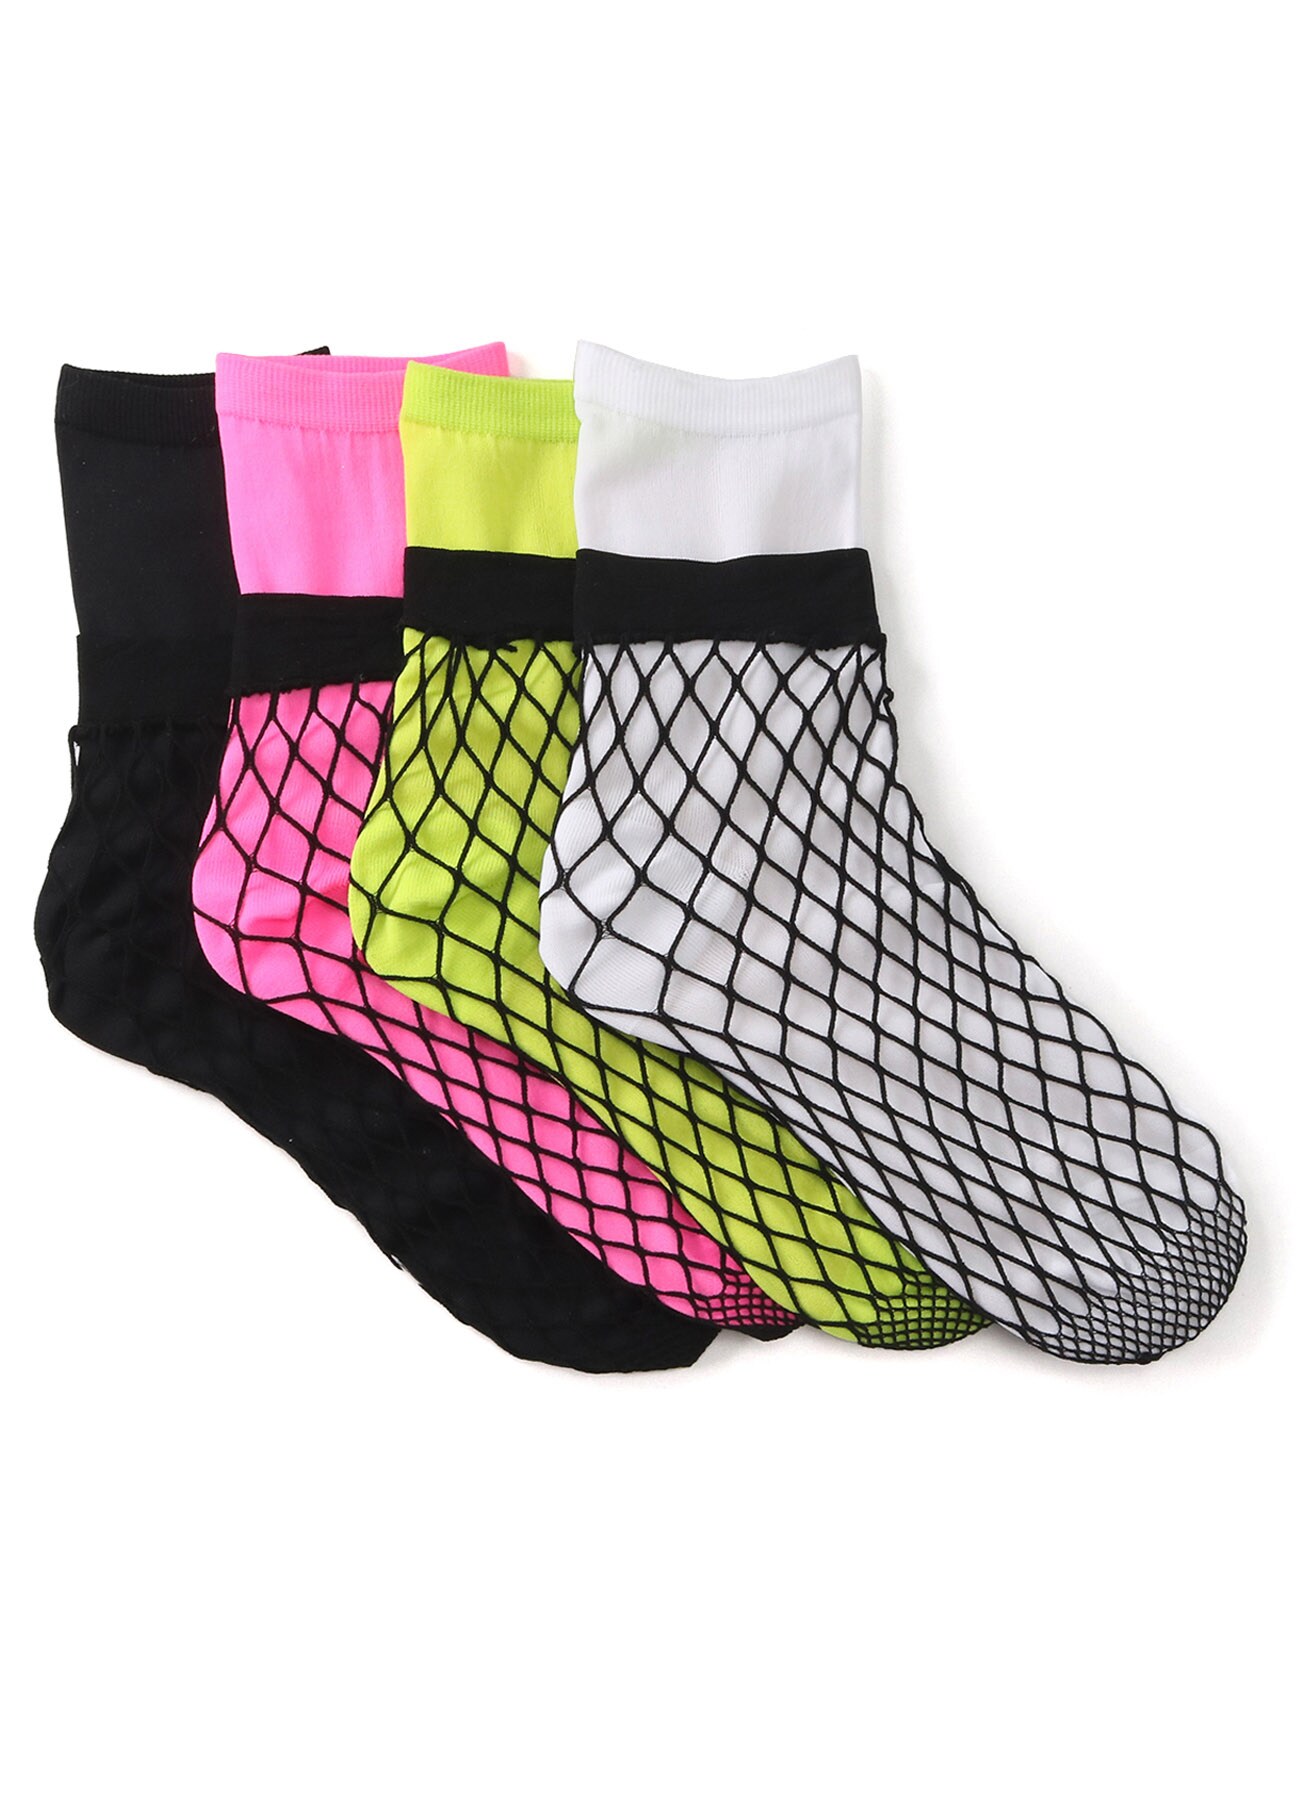 Ny/Pu Yarn Net Layered Socks